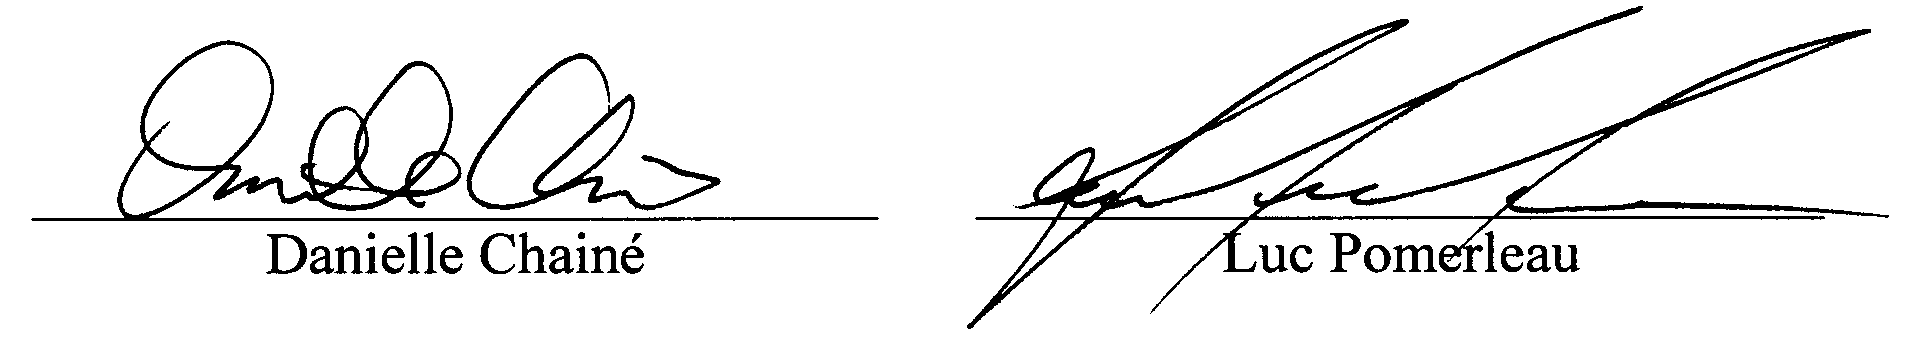 Page signature - Appendice B - Convention TR